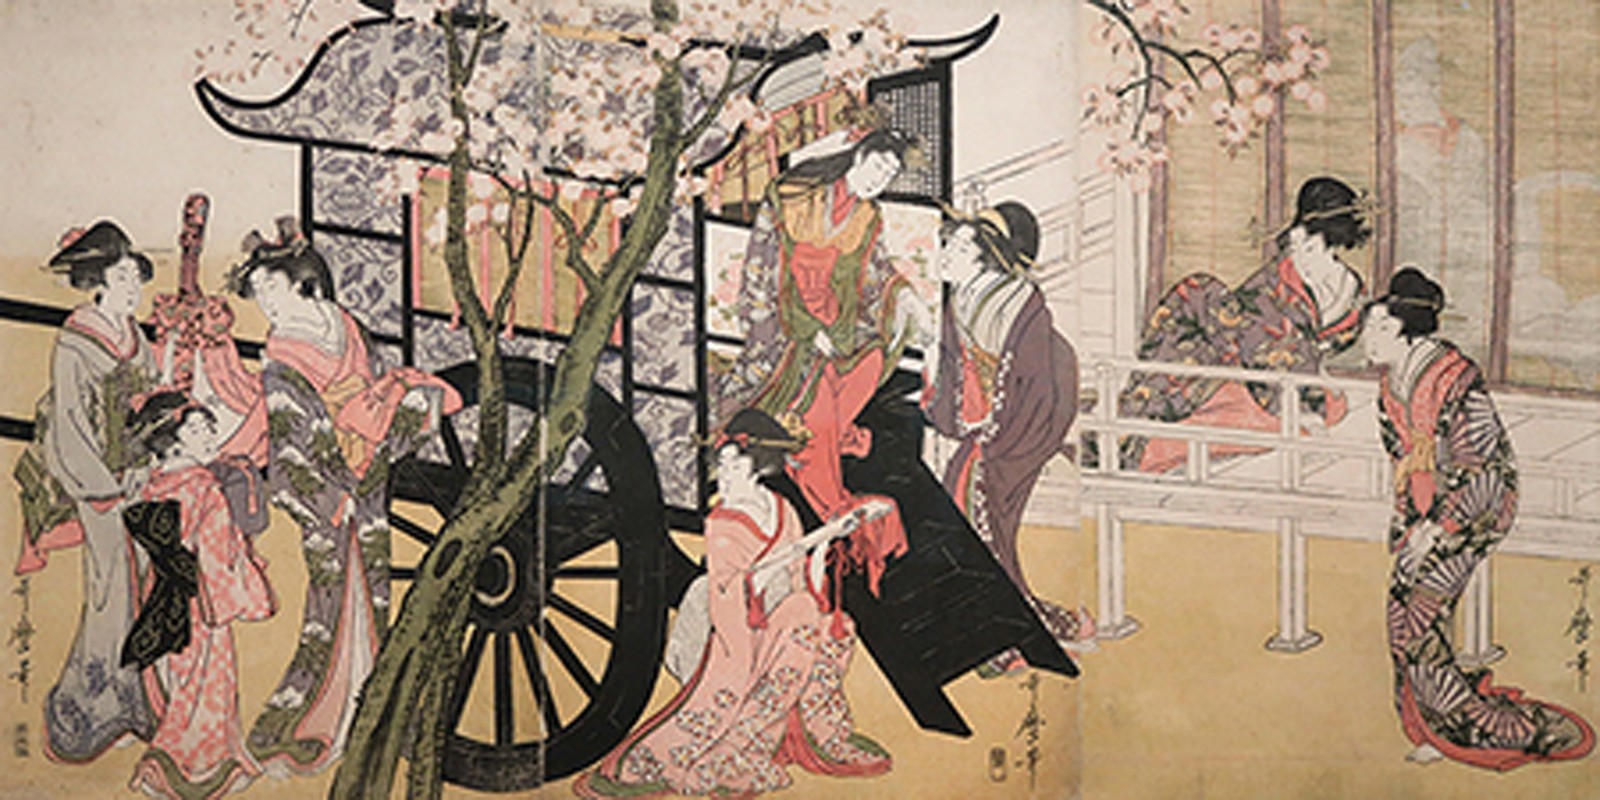 Utamaro Kitagawa - Courtesans admiring cherry blossoms